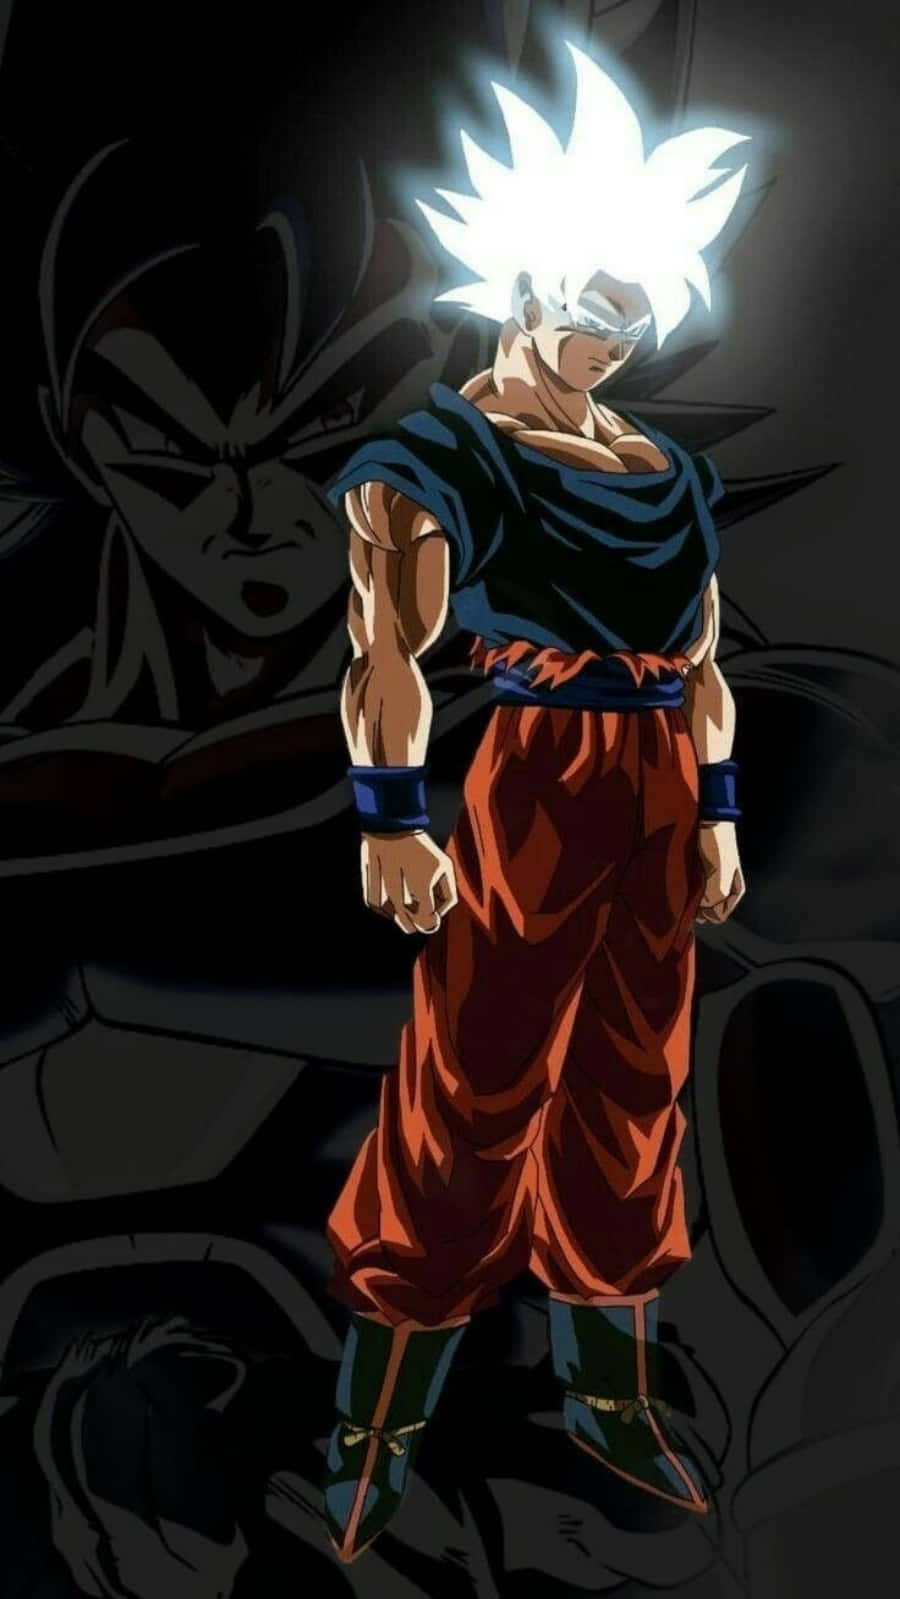 Heroic Super Saiyan Goku Dragon Ball Super iPhone Wallpaper